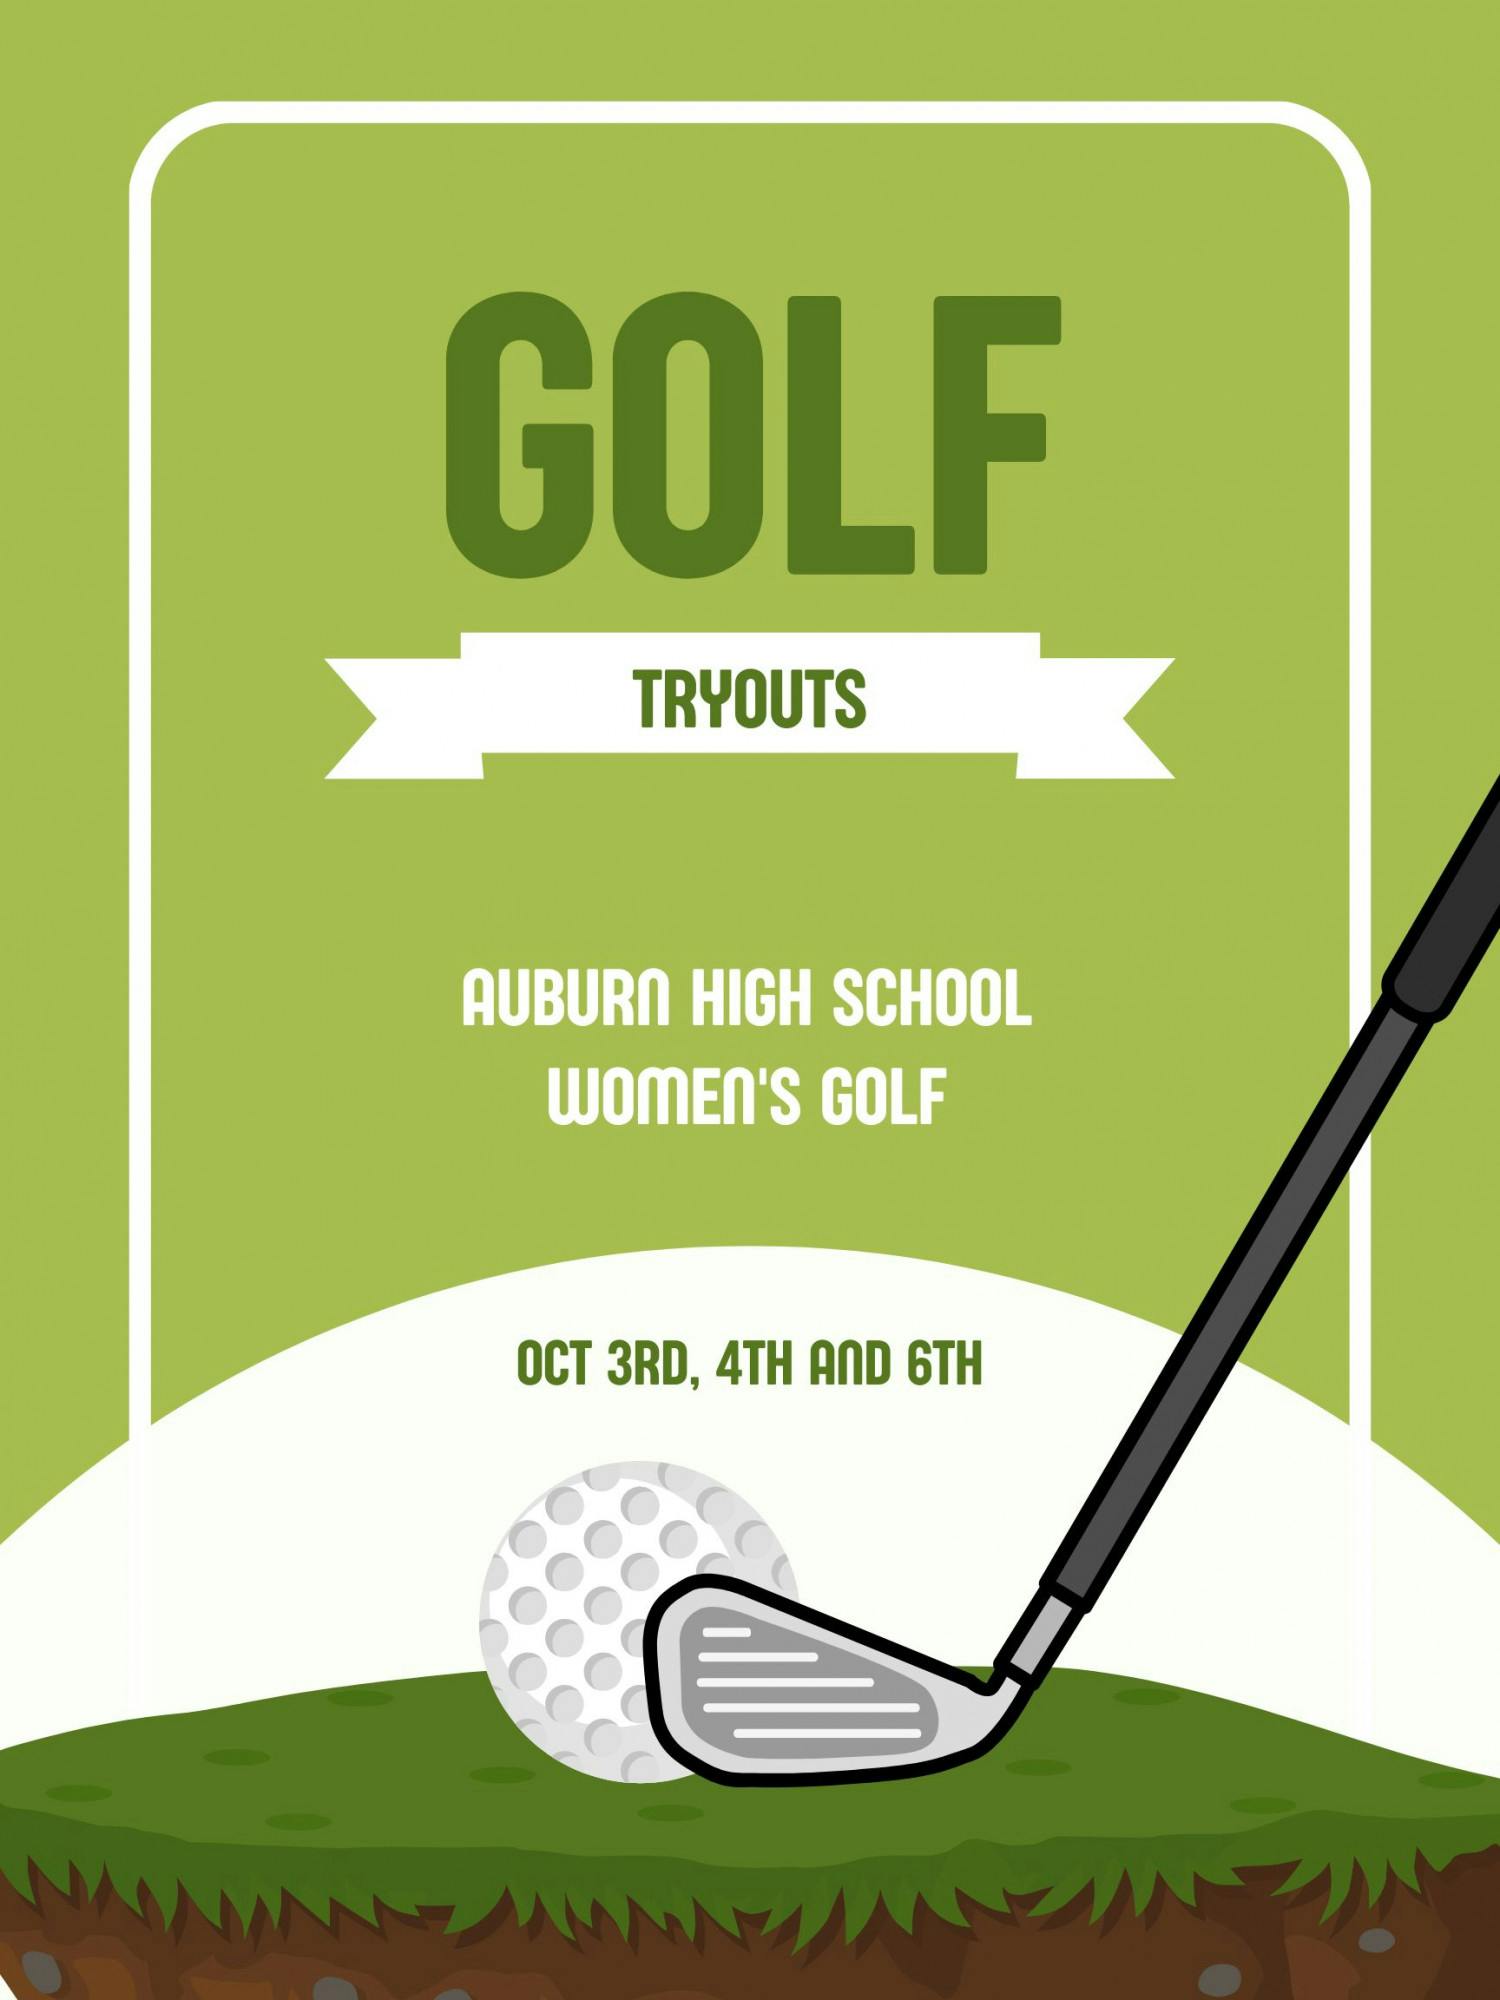 Minimalist Golf Tournament Poster.jpg